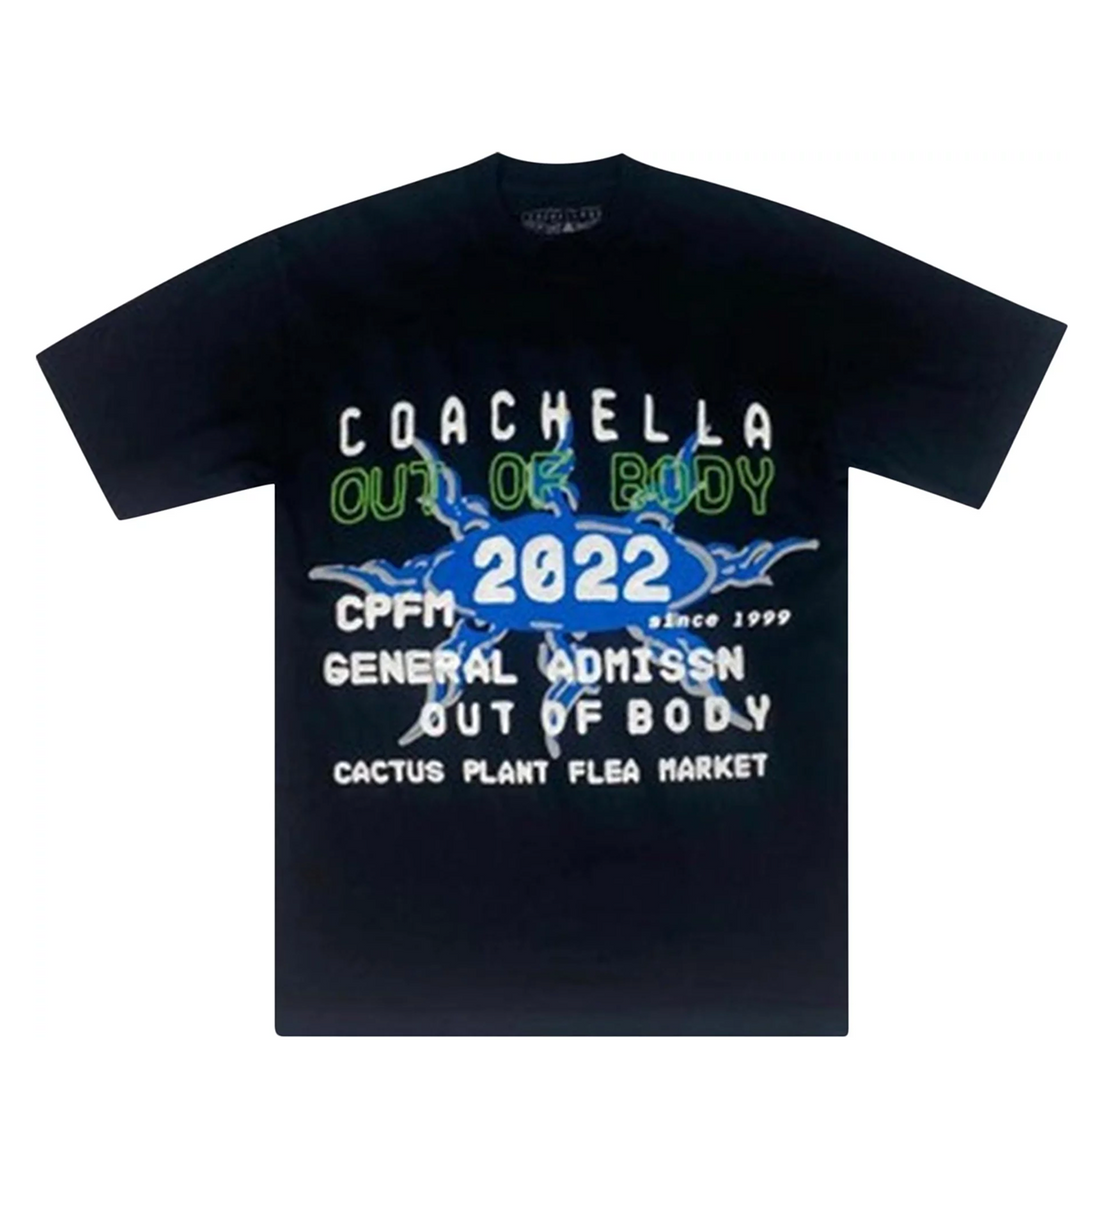 Coachella x CPFM Tee Black/Blue